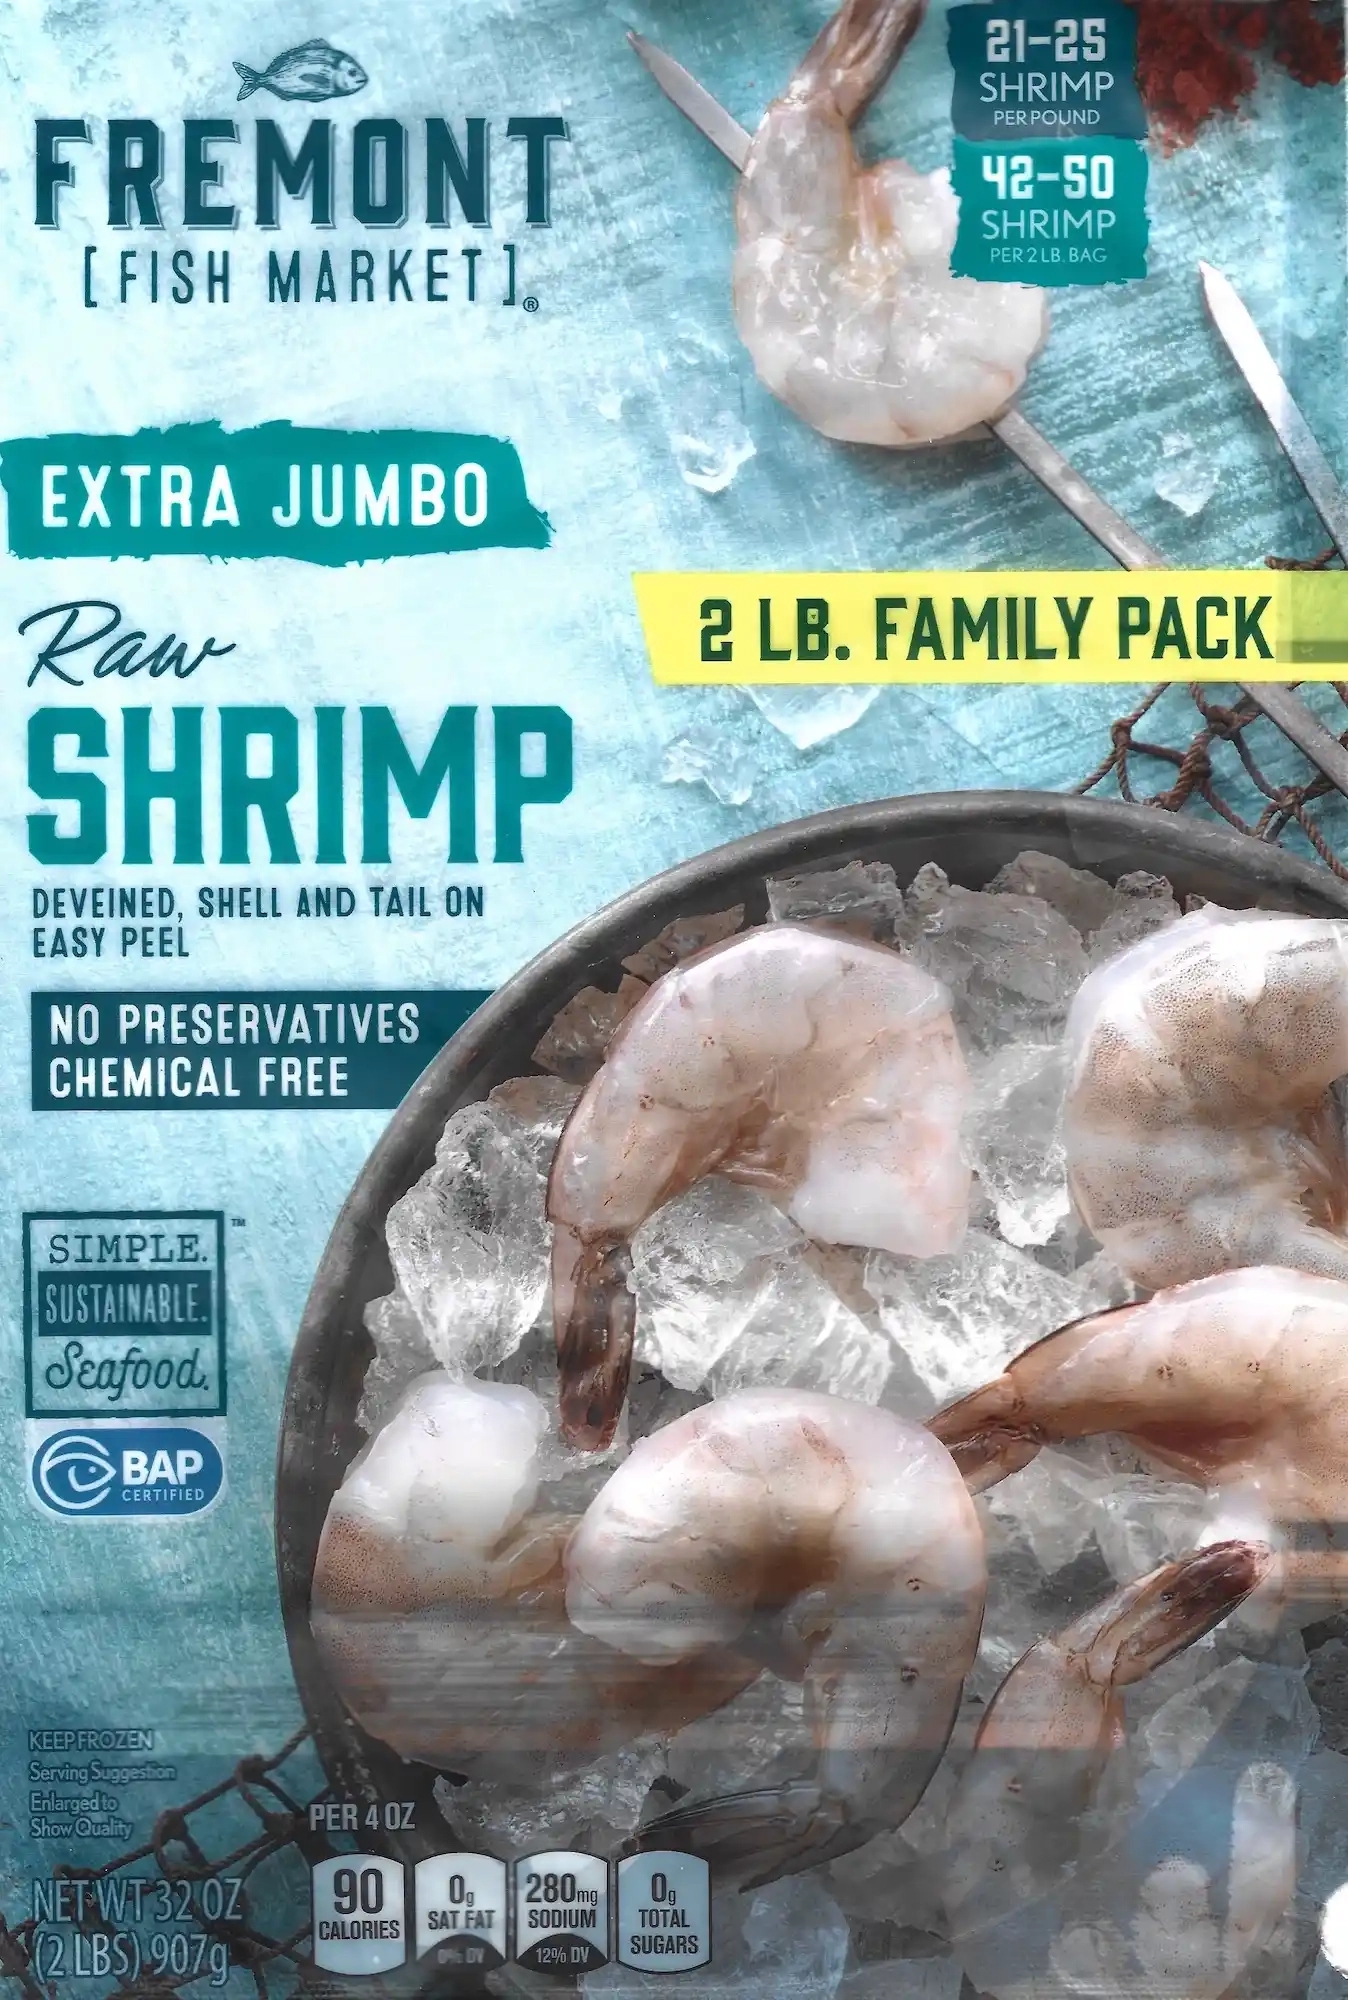 Fremont Fish Market Extra Jumbo Raw Shrimp 2 LB Family Pack